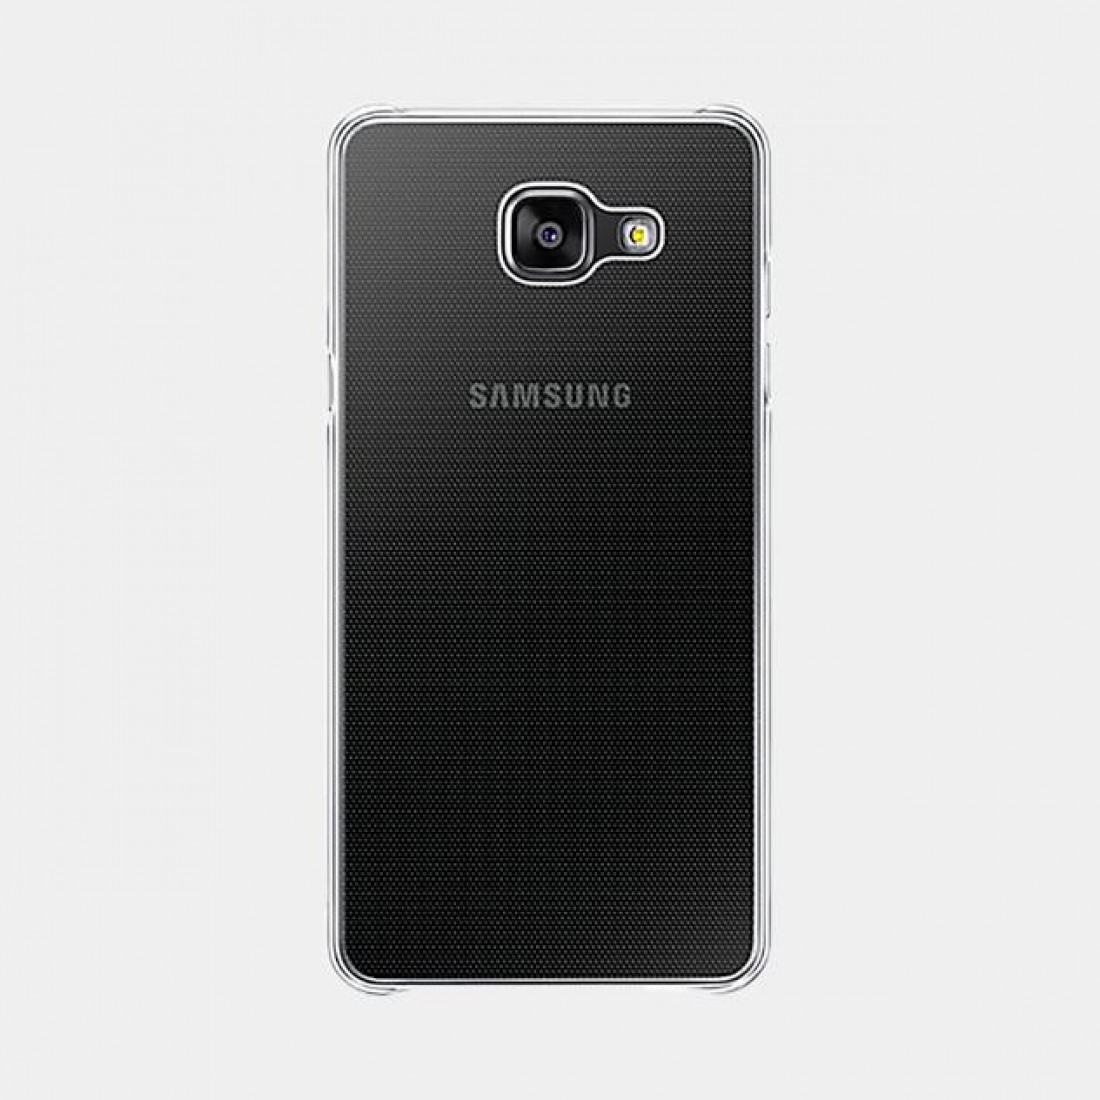 Samsung a5 2016